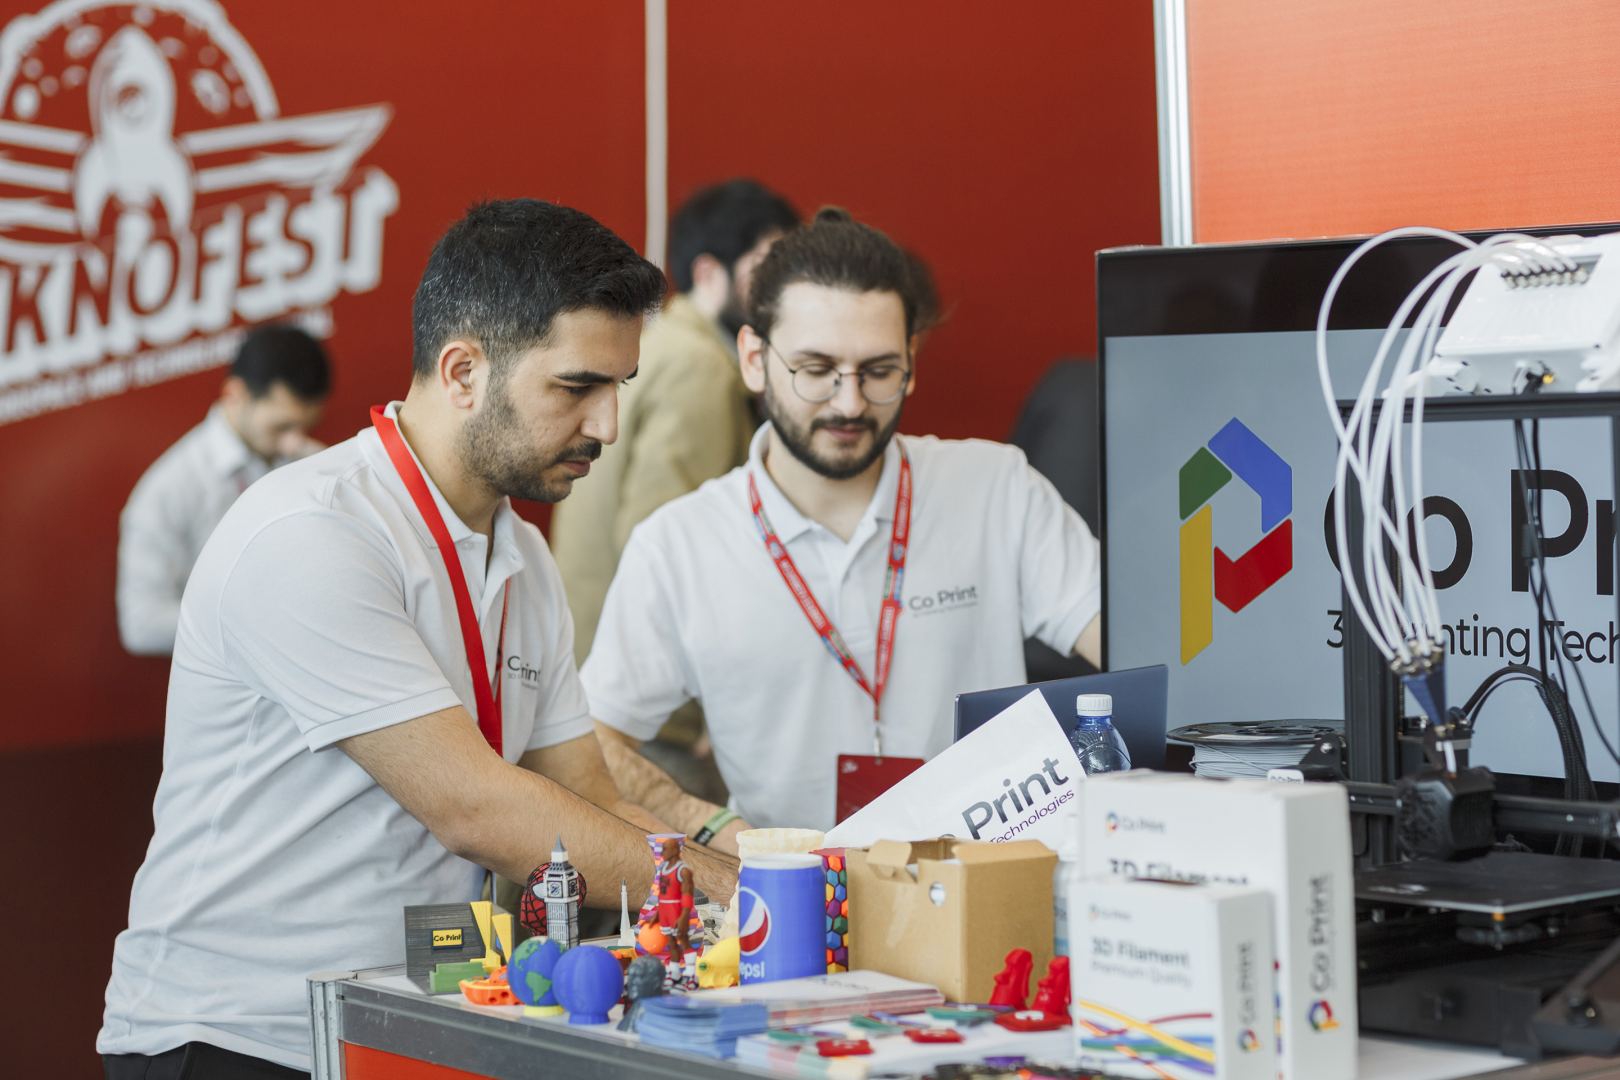 Take Off Baku international startup summit starts within TEKNOFEST (PHOTO)